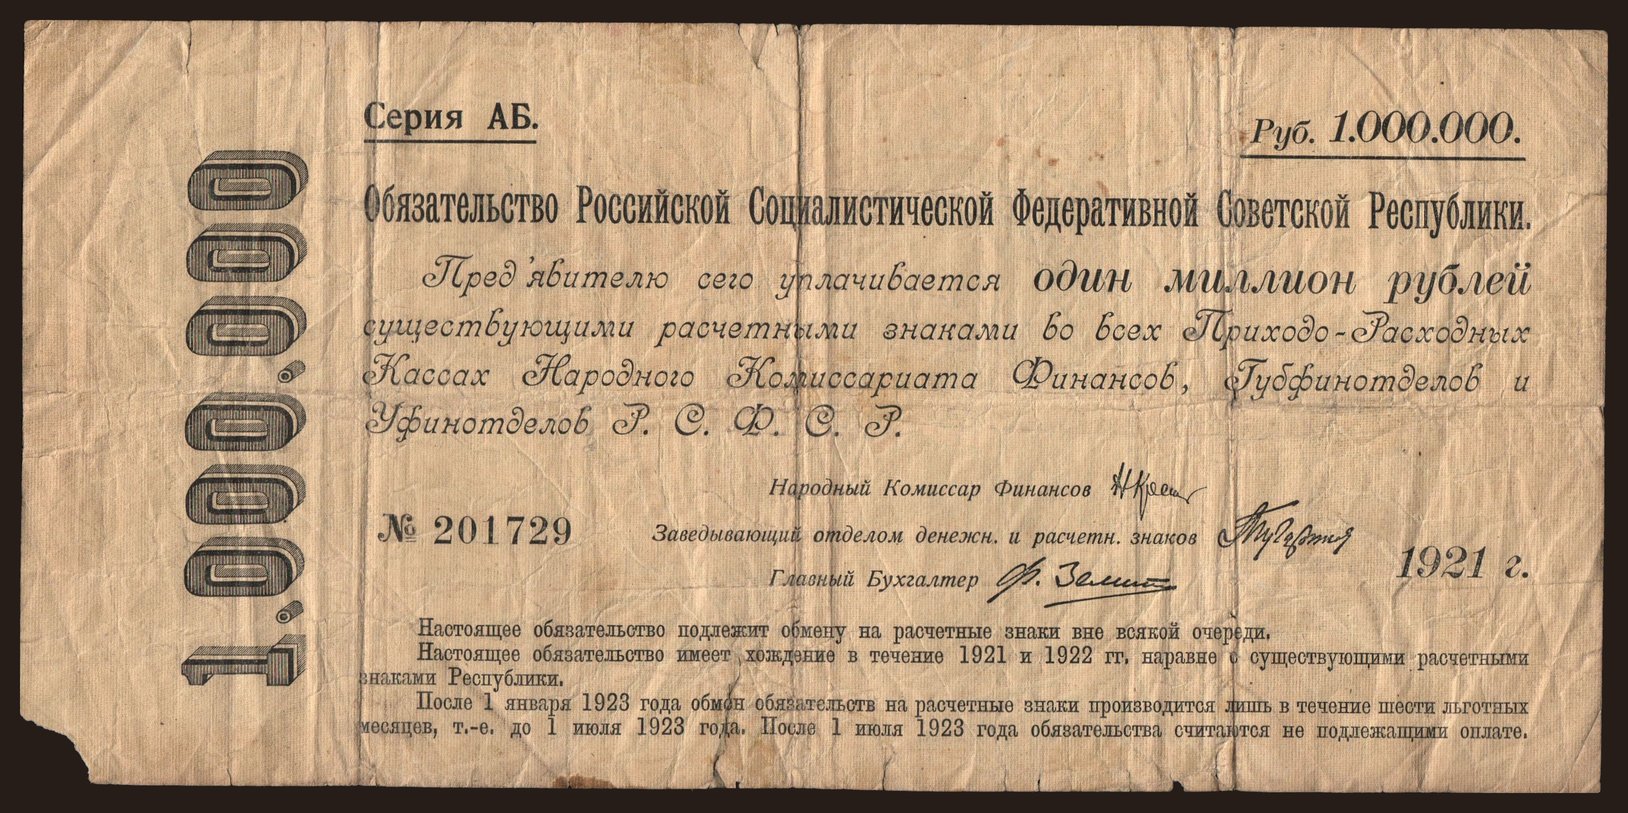 1.000.000 rubel, 1921